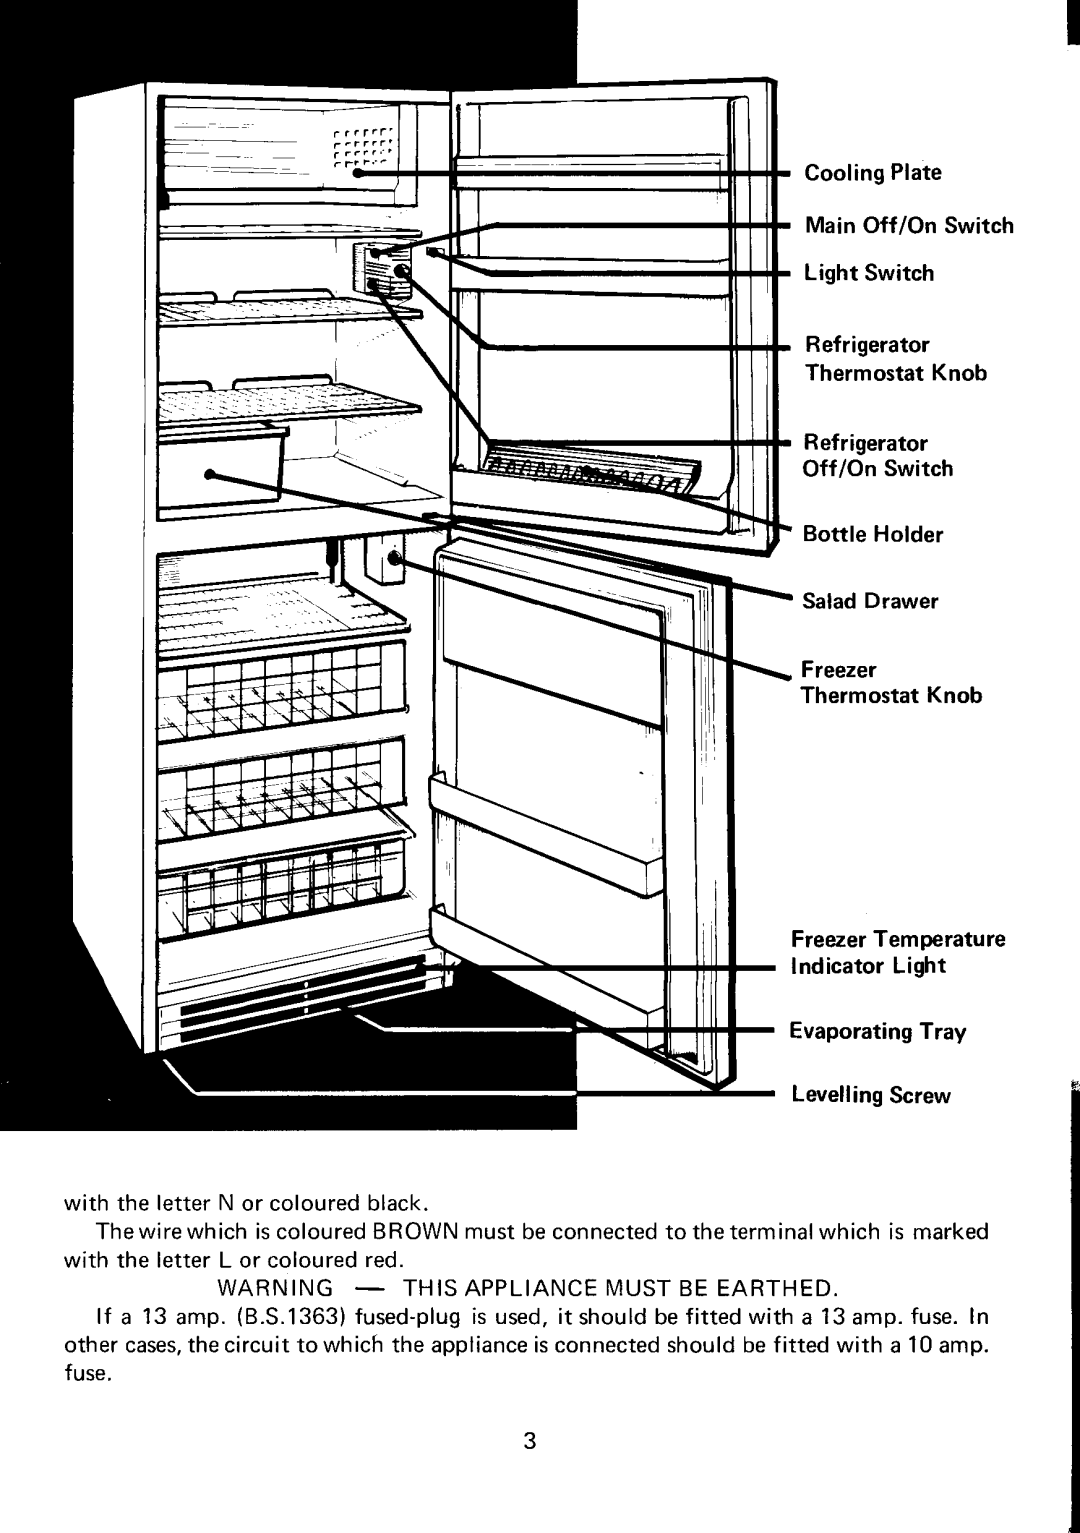 Electrolux TR70/55, TR71/55 manual 